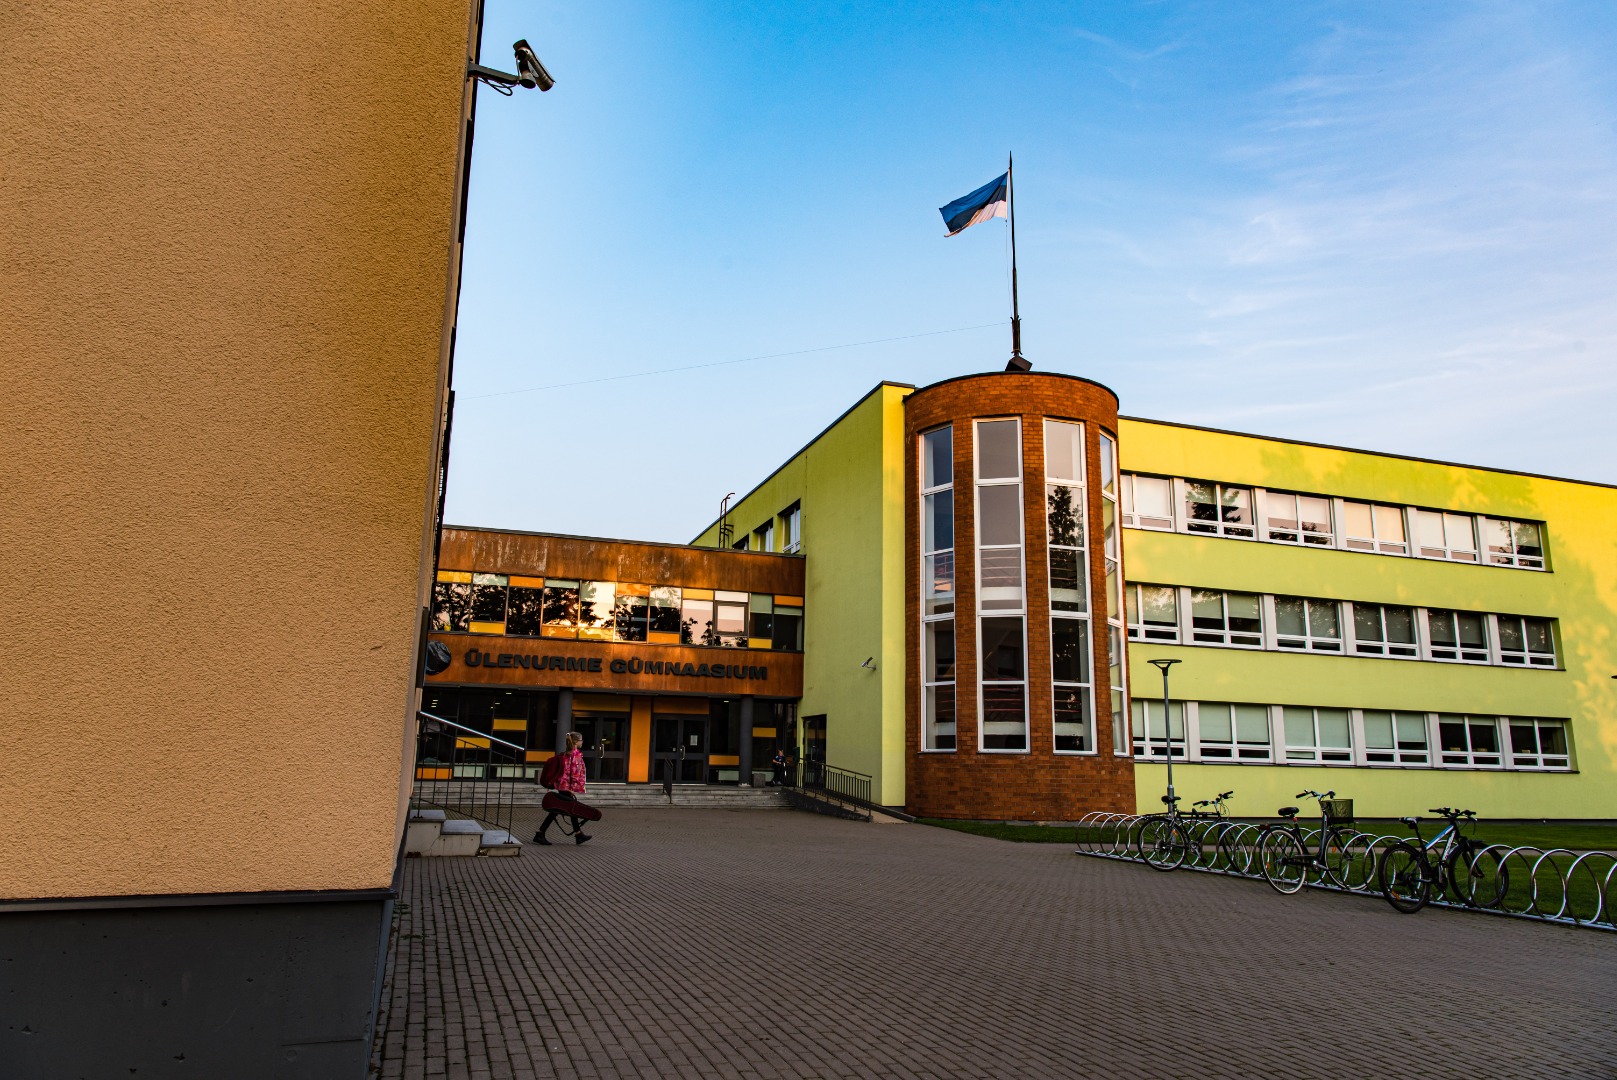 Upper-urme secondary school building. rephoto